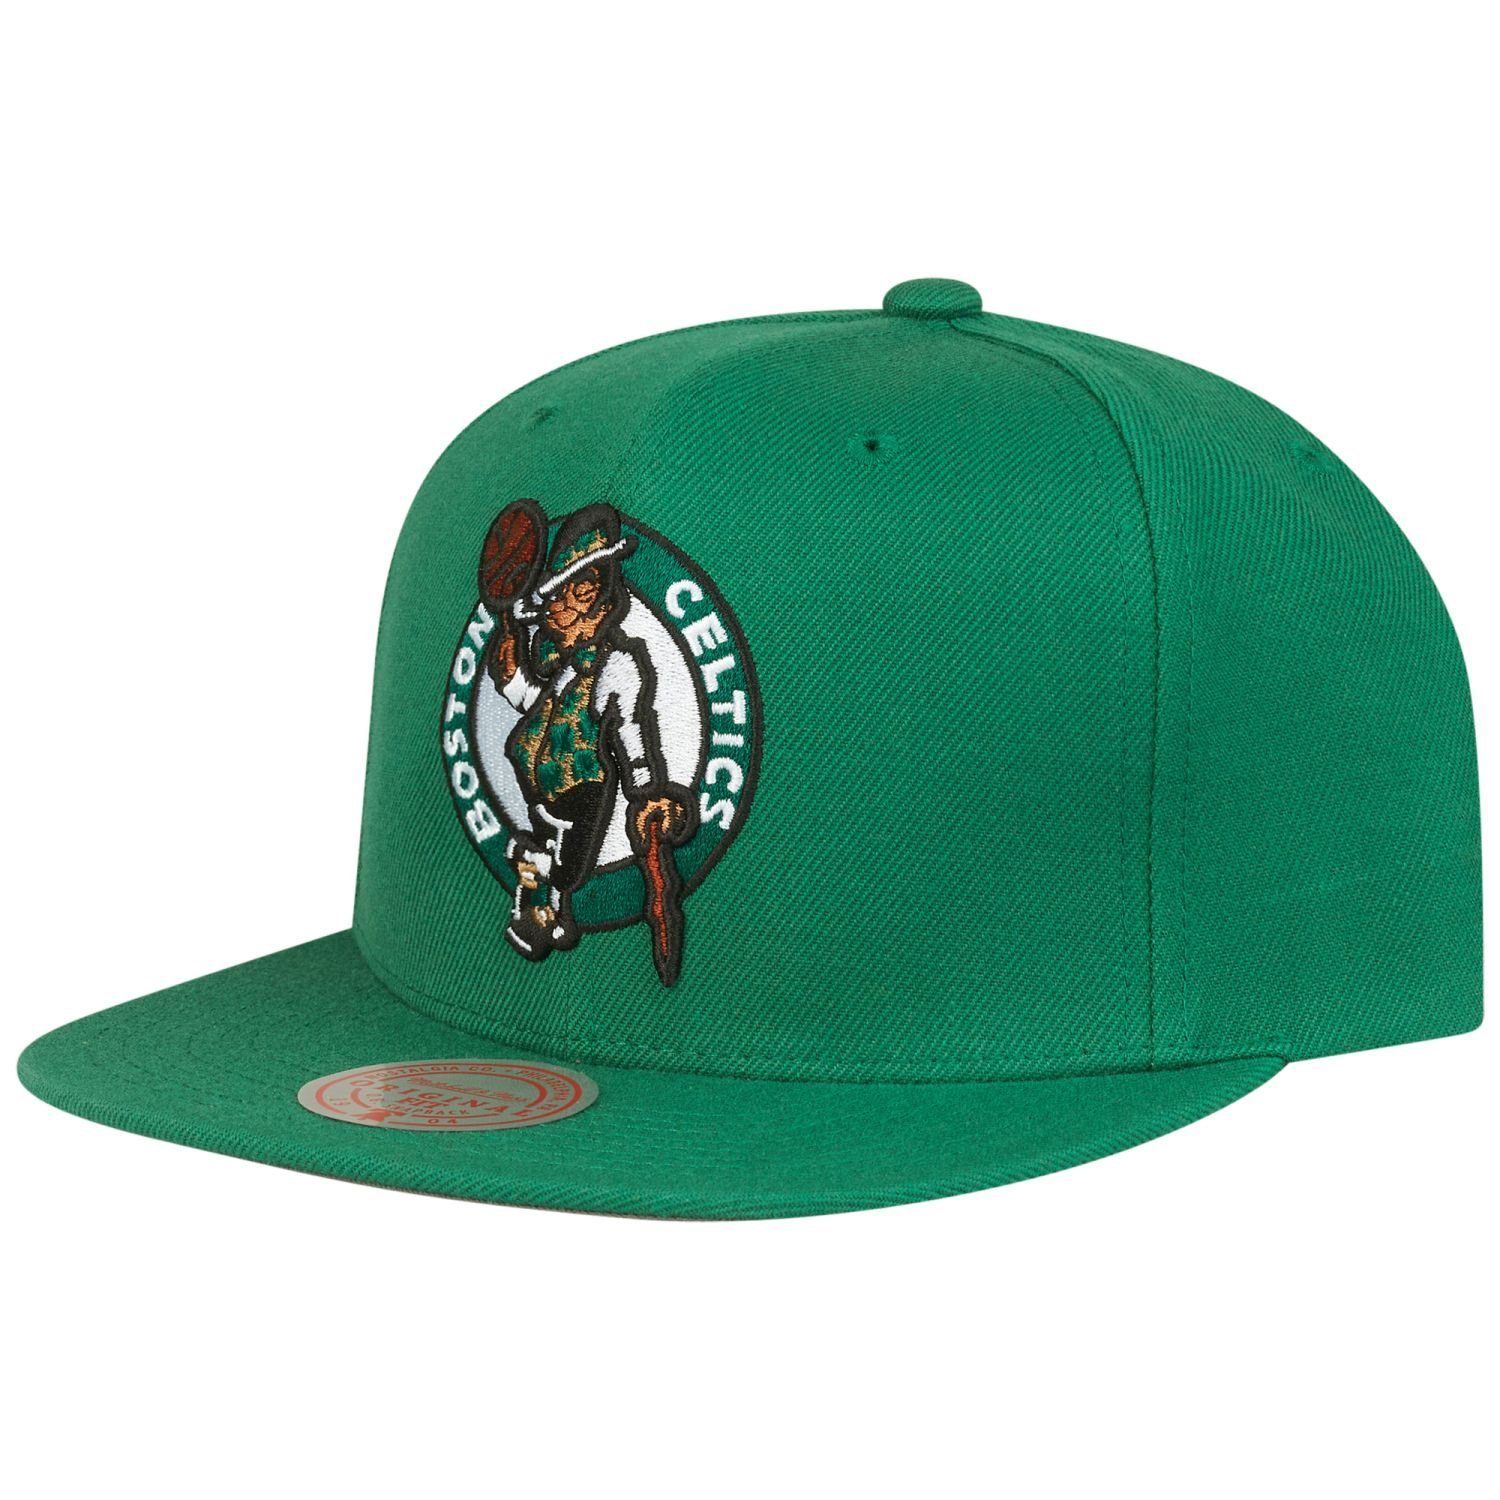 Mitchell & Ness Snapback Boston Cap TEAM Celtics